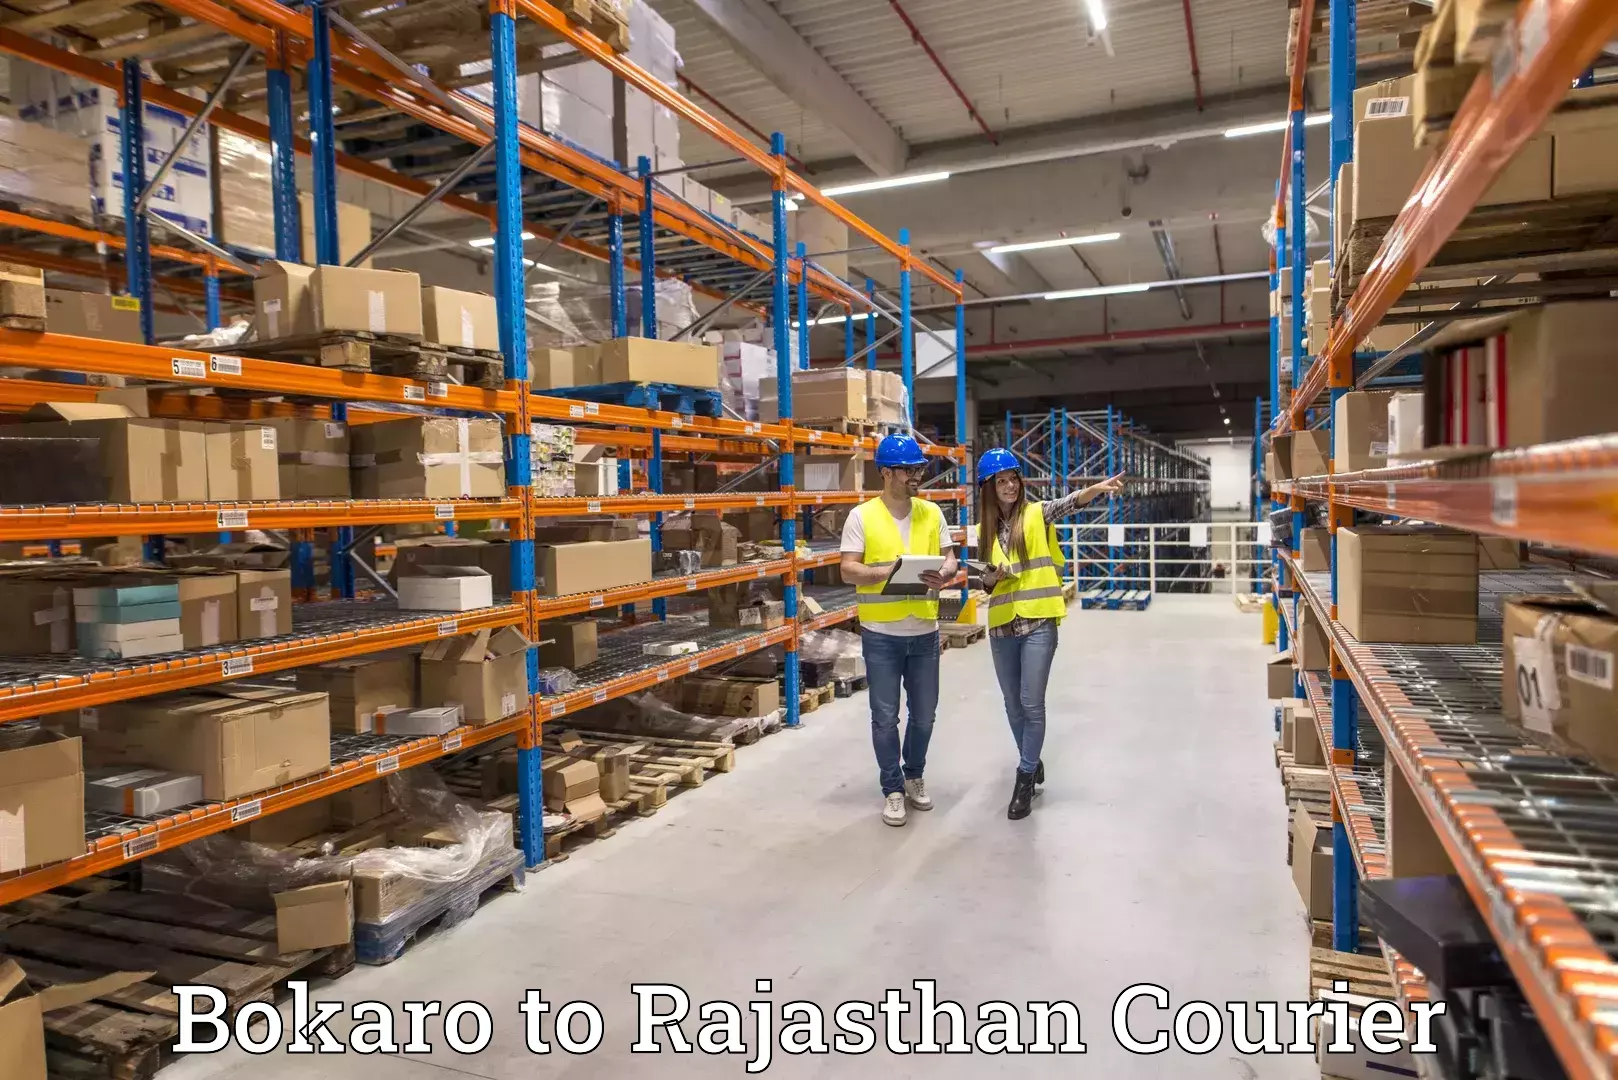 Global logistics network Bokaro to Rajasthan